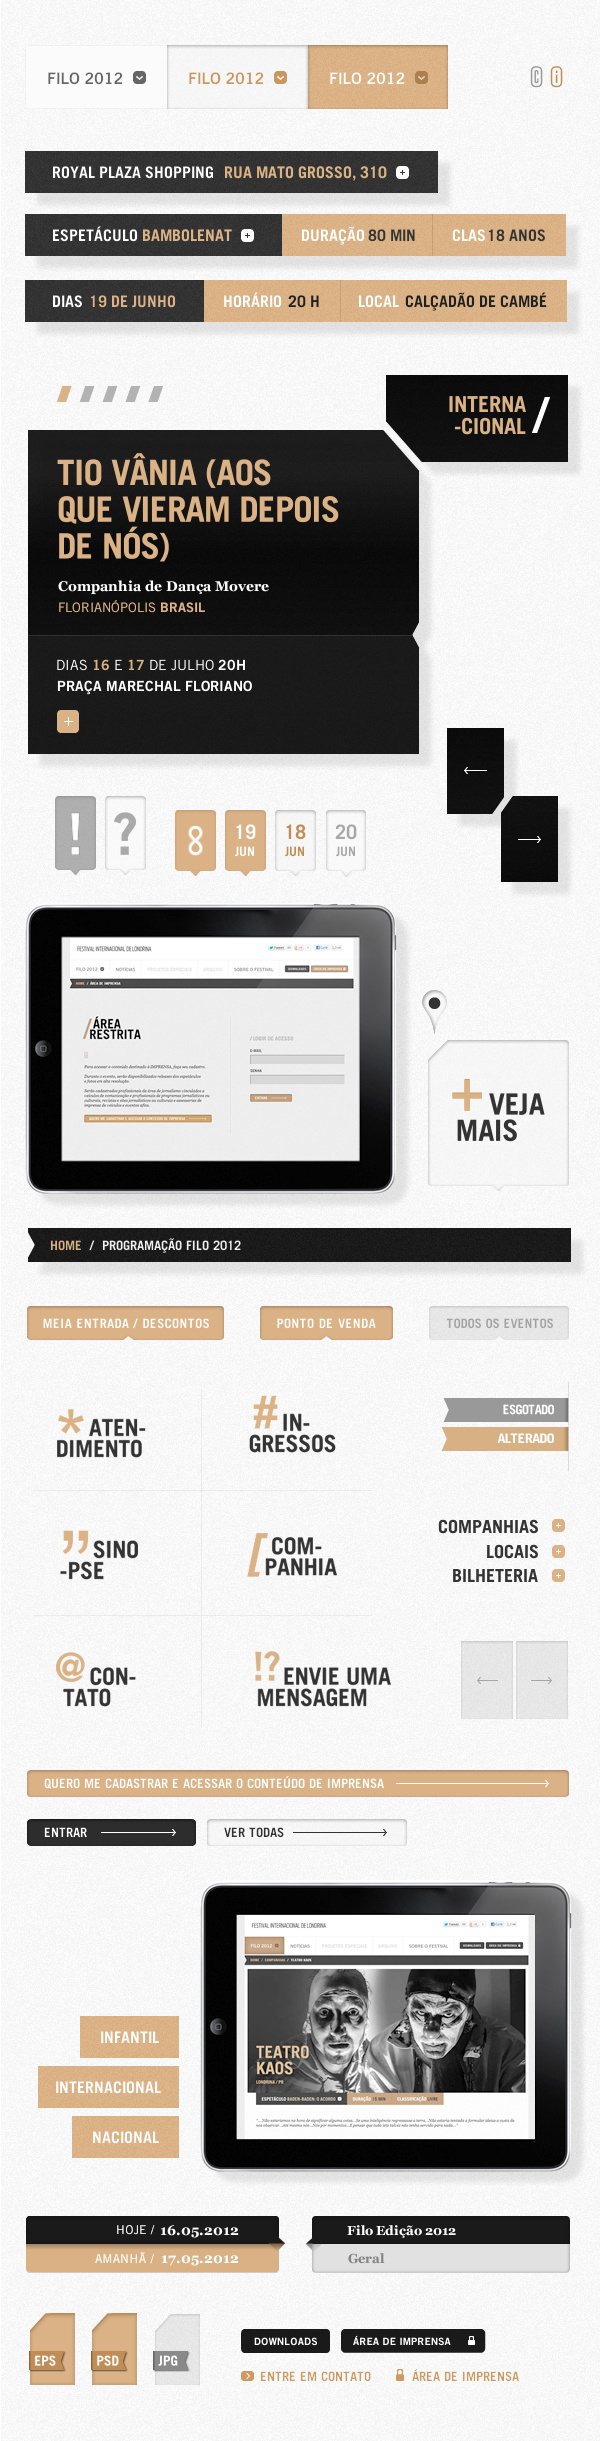 Filo Festival 2012 | Londrina #app #web #mobile